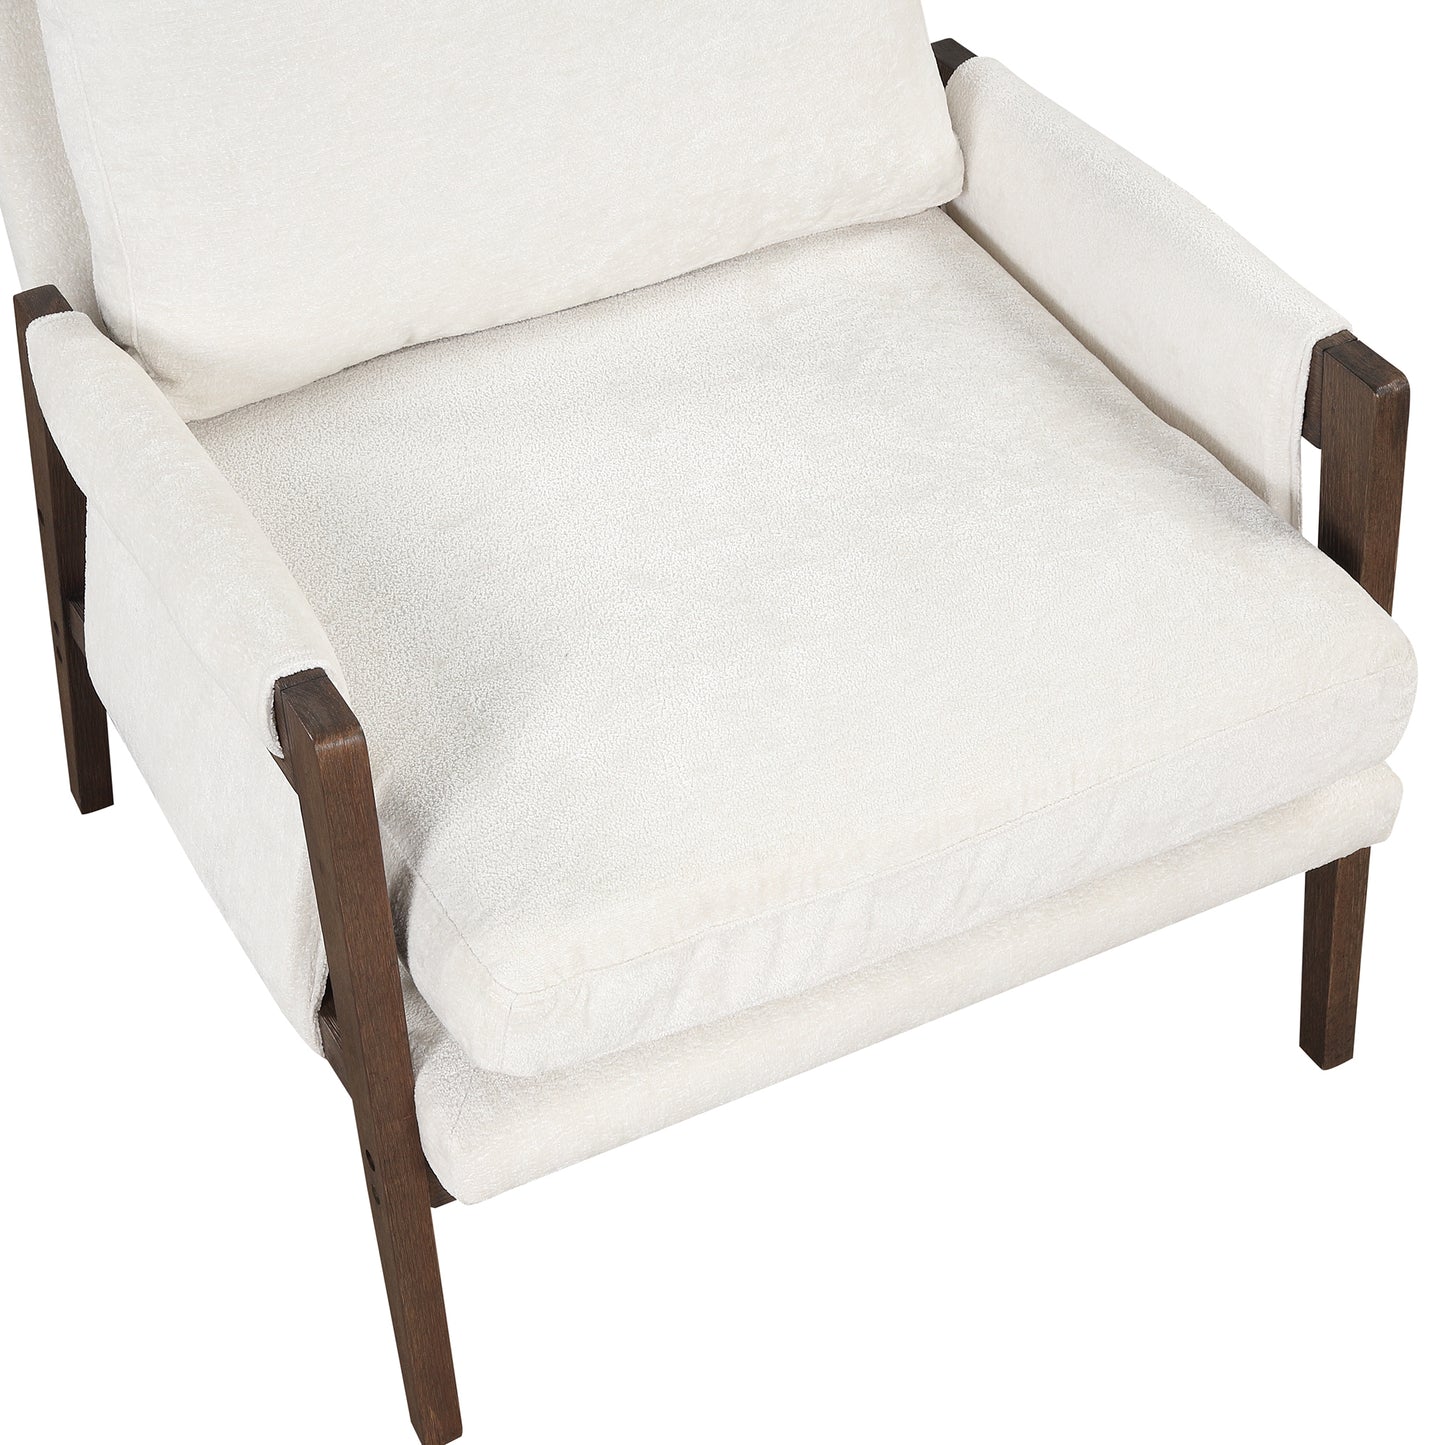 Malibu White Accent Chair